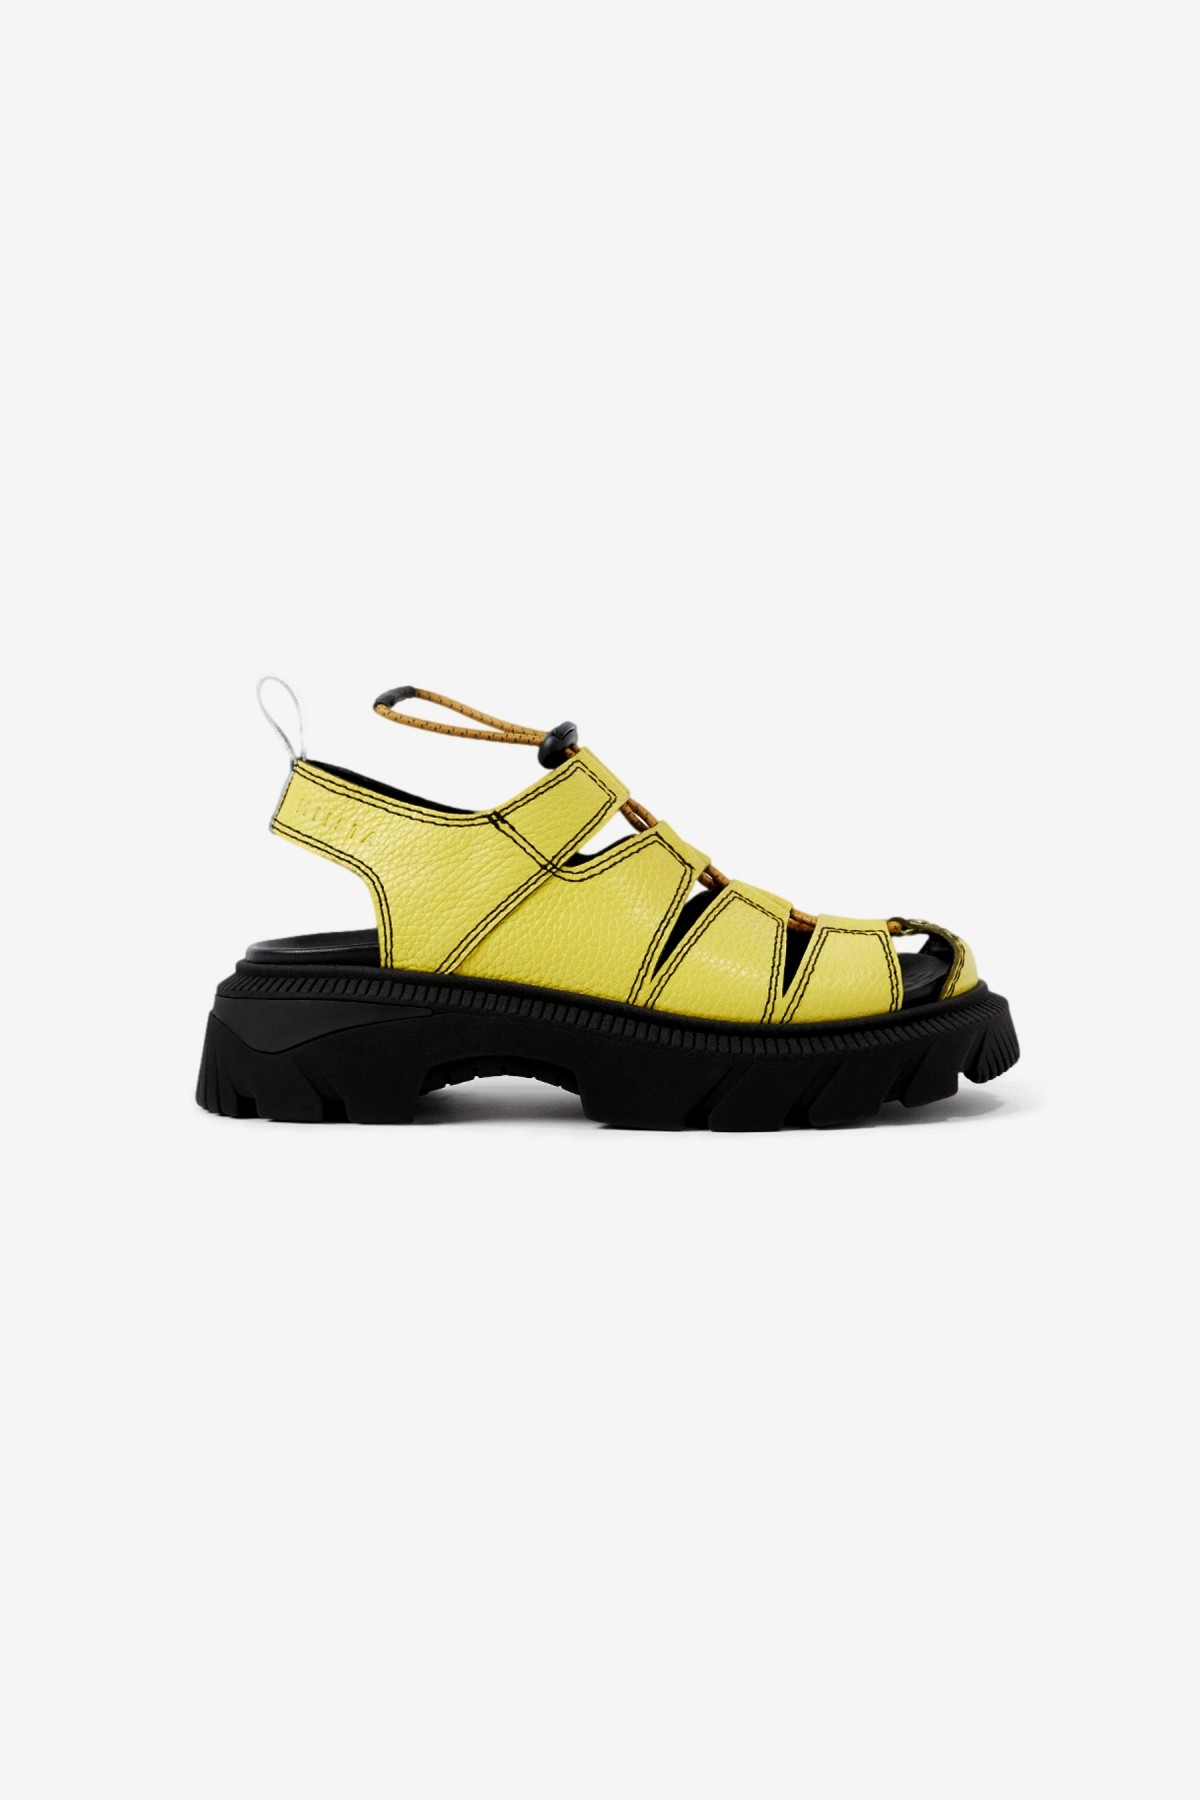 Miista Eunice Lime Sandals in Yellow